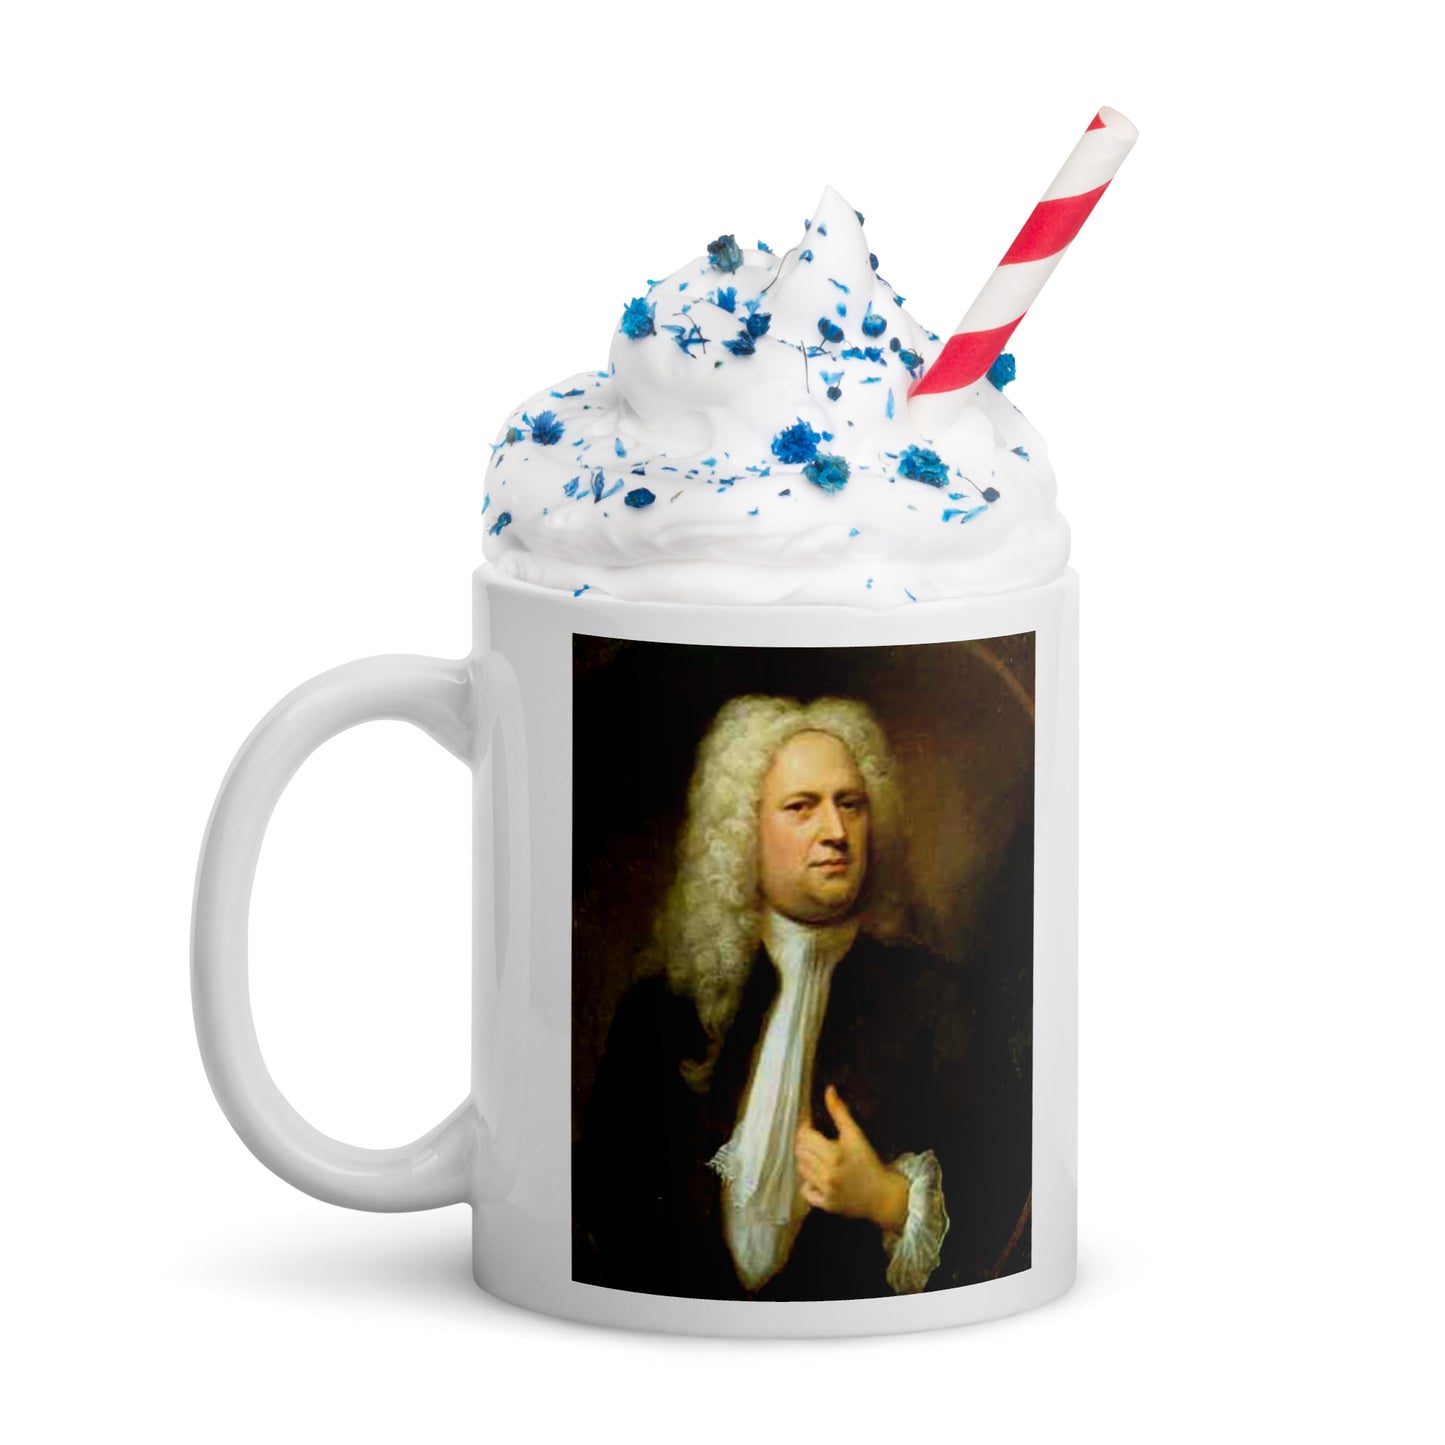 Handel white glossy mug